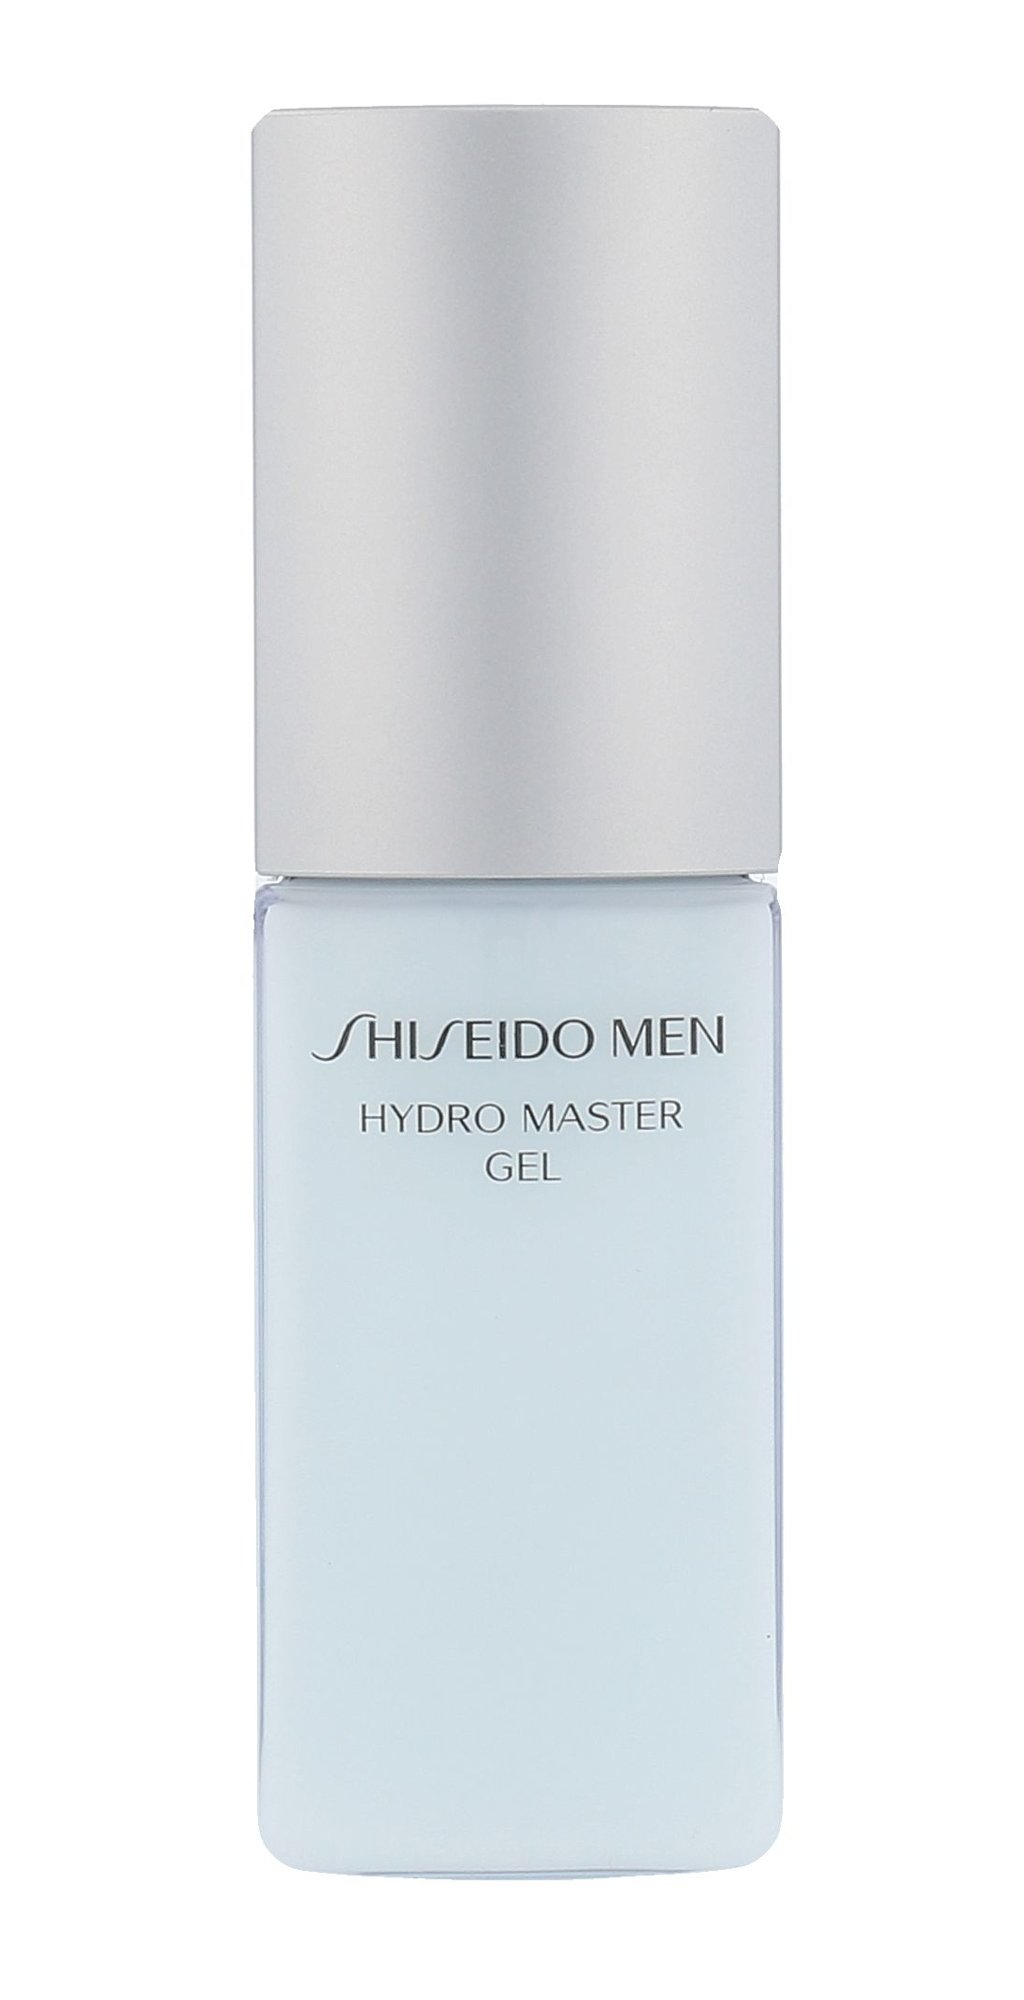 Shiseido MEN Hydro Master Gel veido gelis